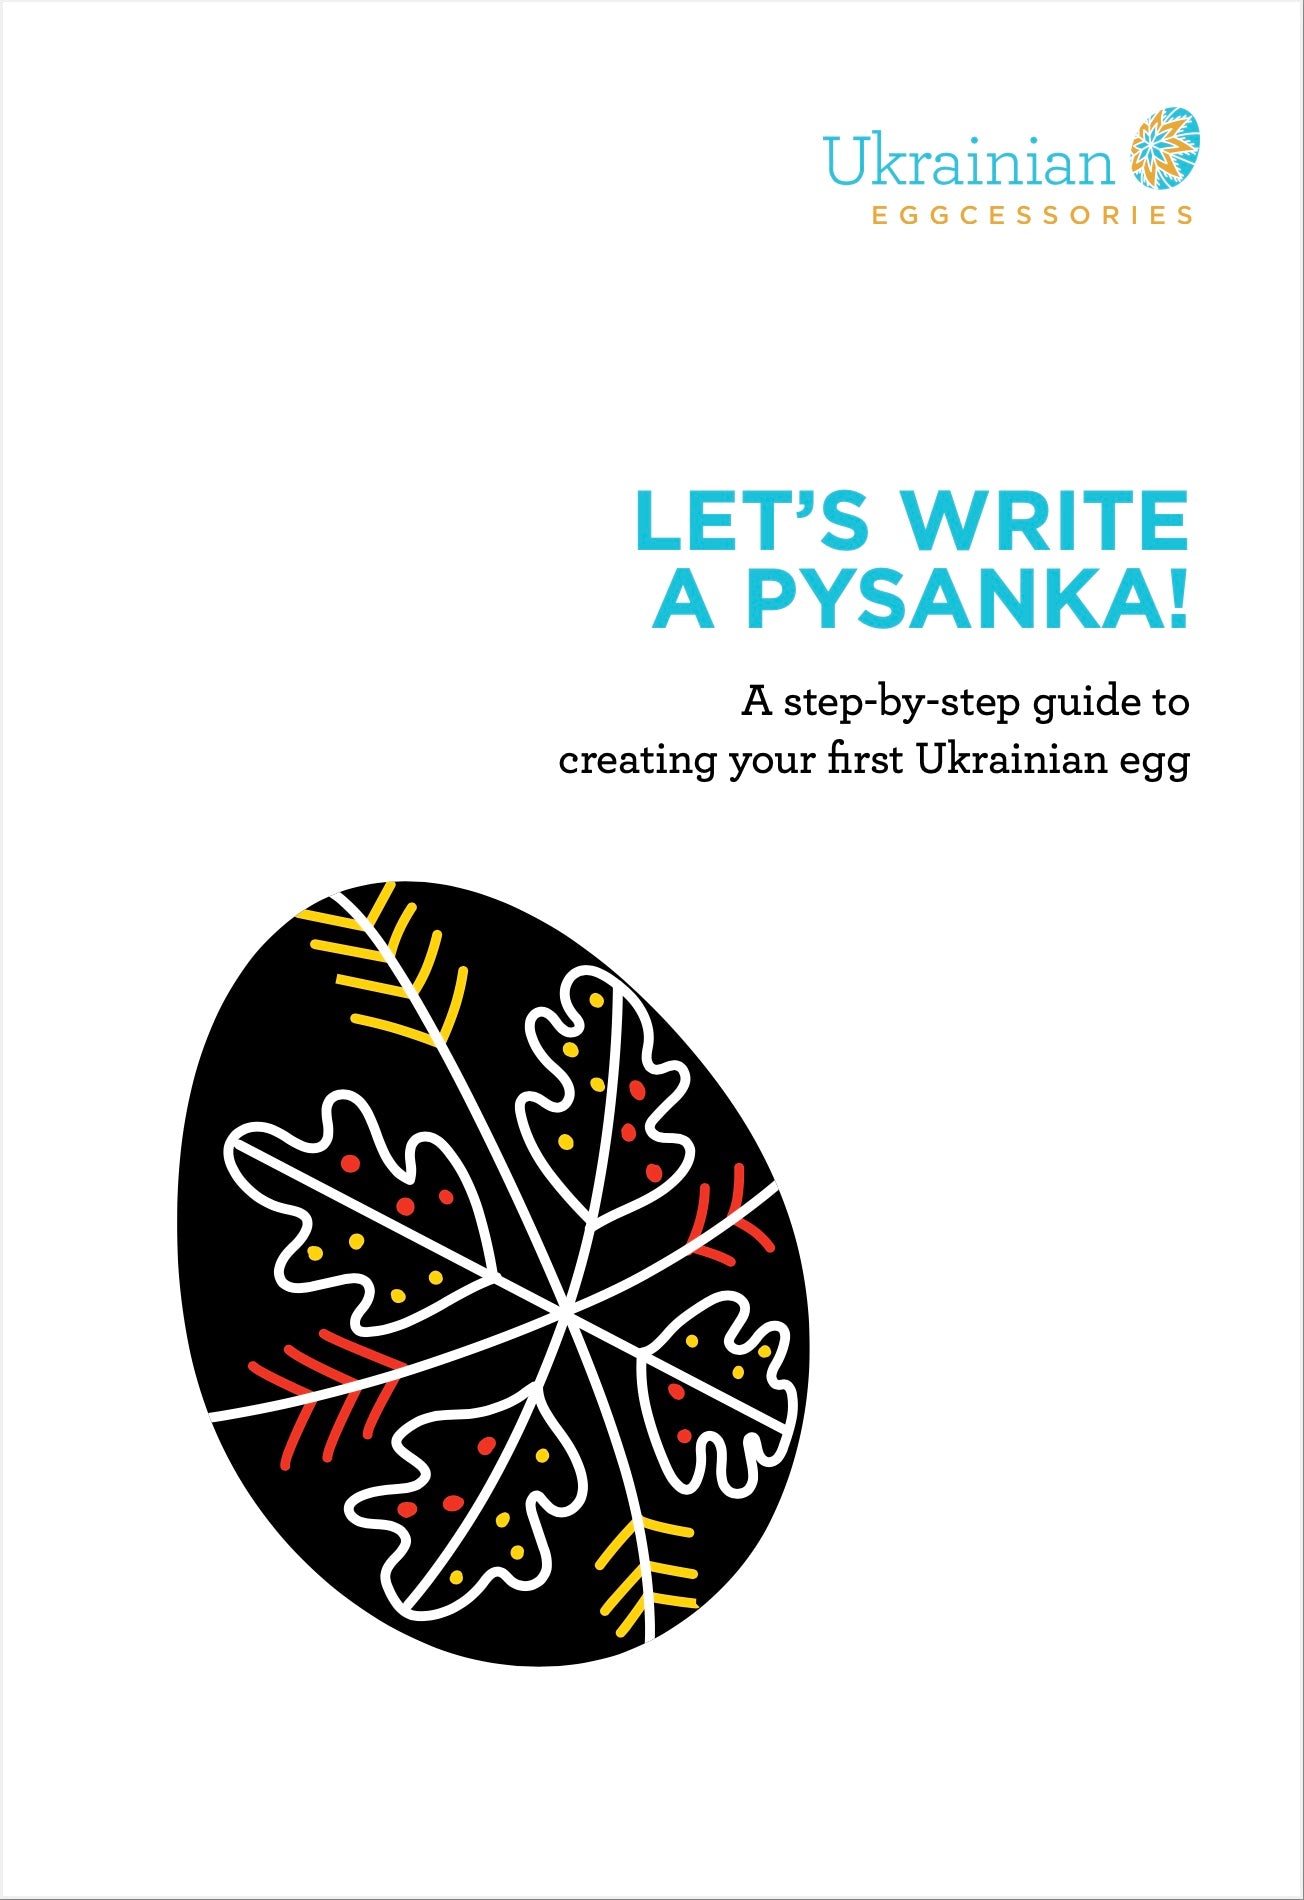 22. Community "Let's Write a Pysanka" Beginner Workshop - Nadia Gennings - Saturday July 20th - 3:30 - 5:30pm